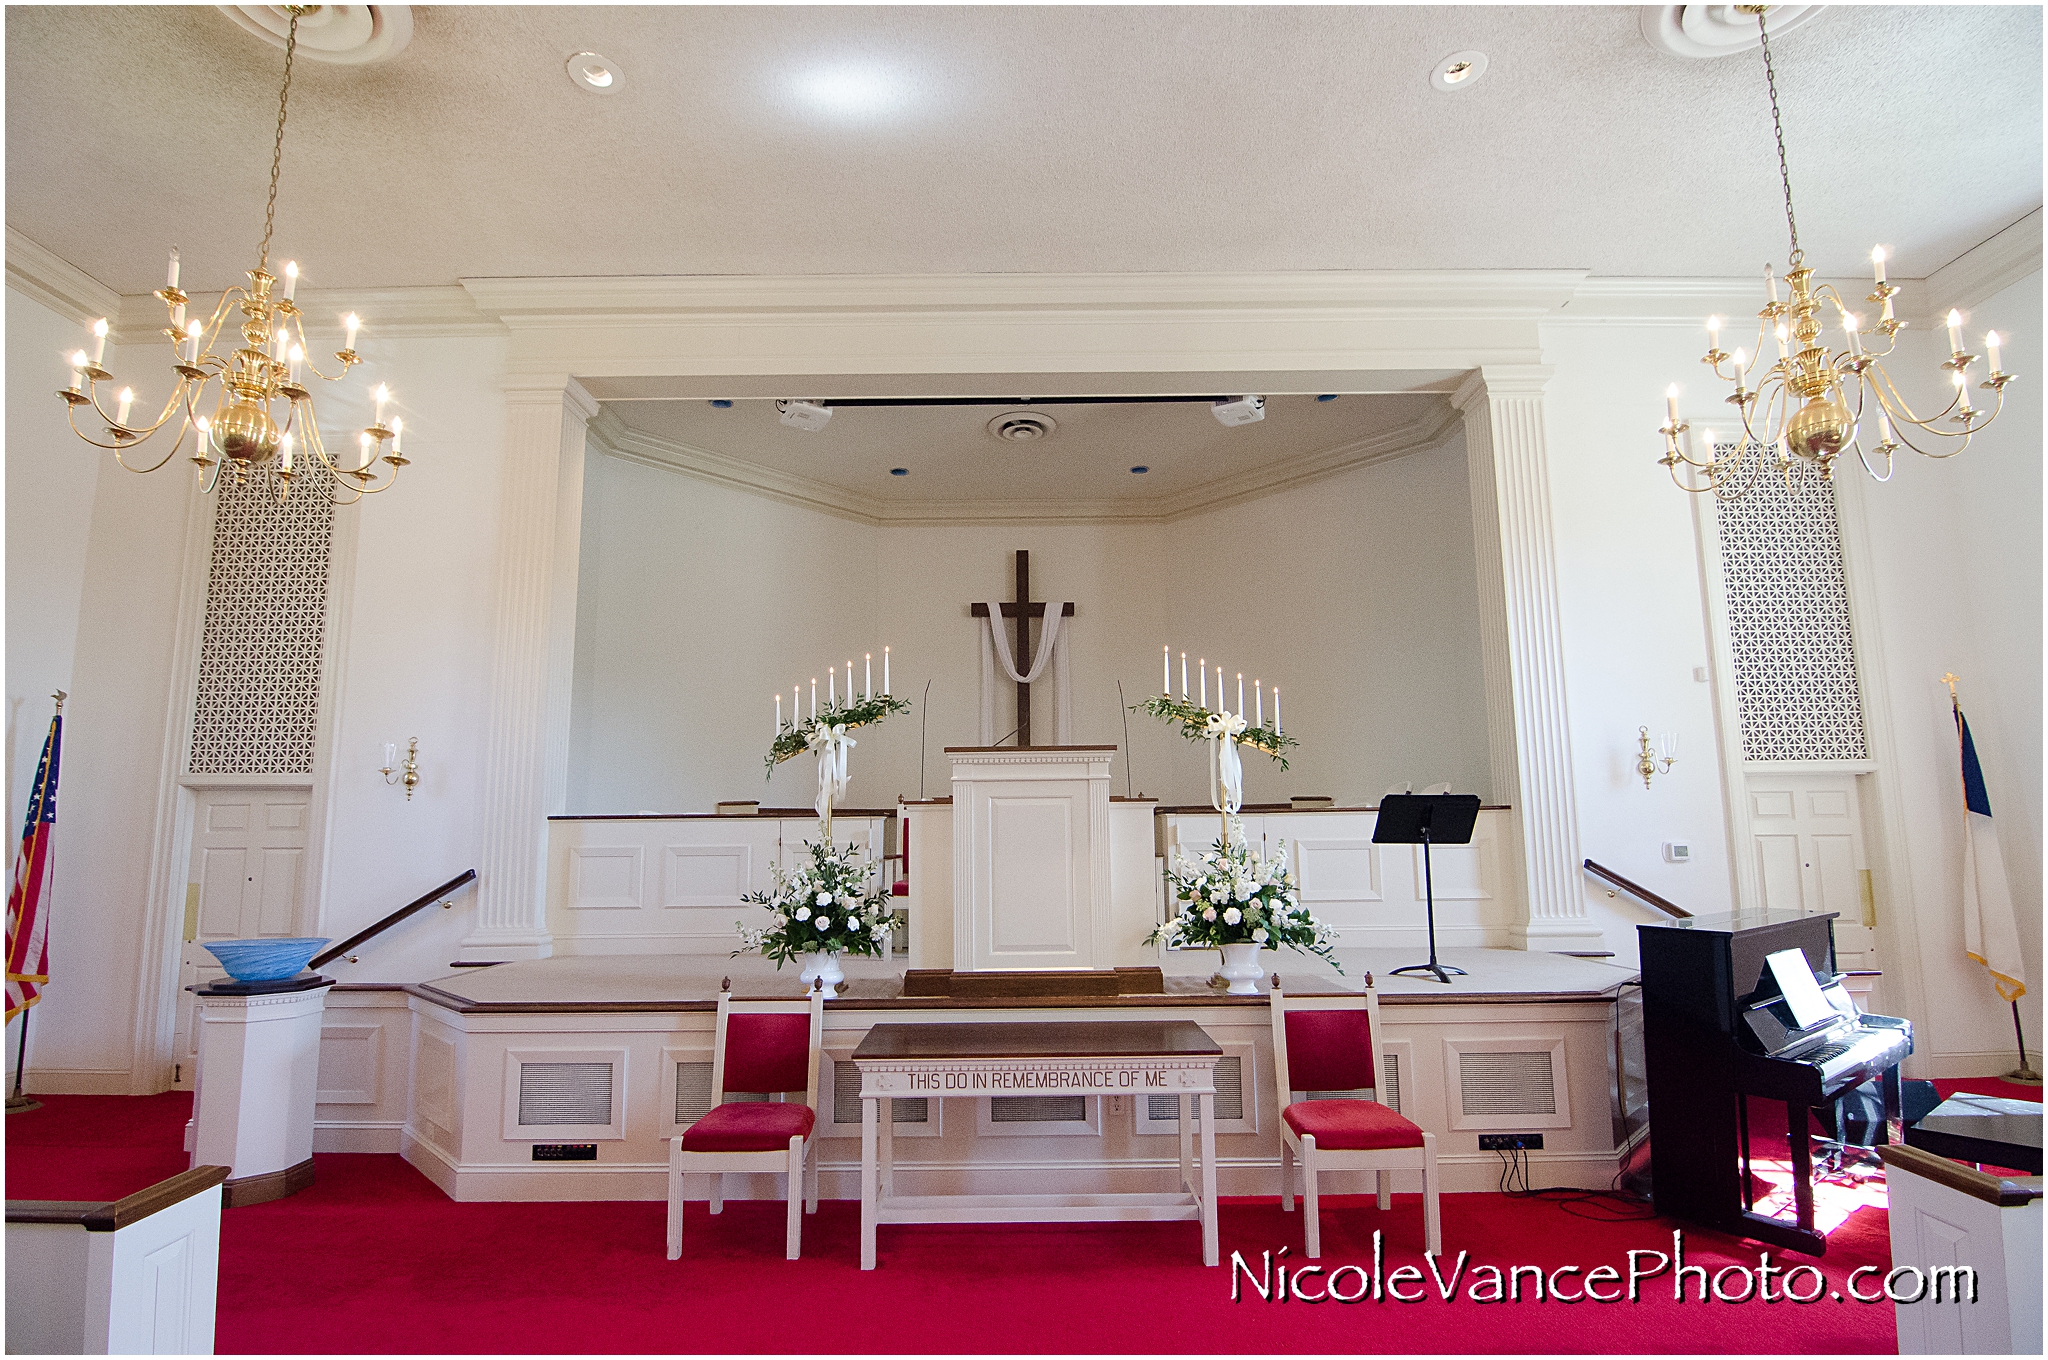 The sanctuary inside Crestwood Presbyterian Church on Jahnke Rd in Chesterfield VA.